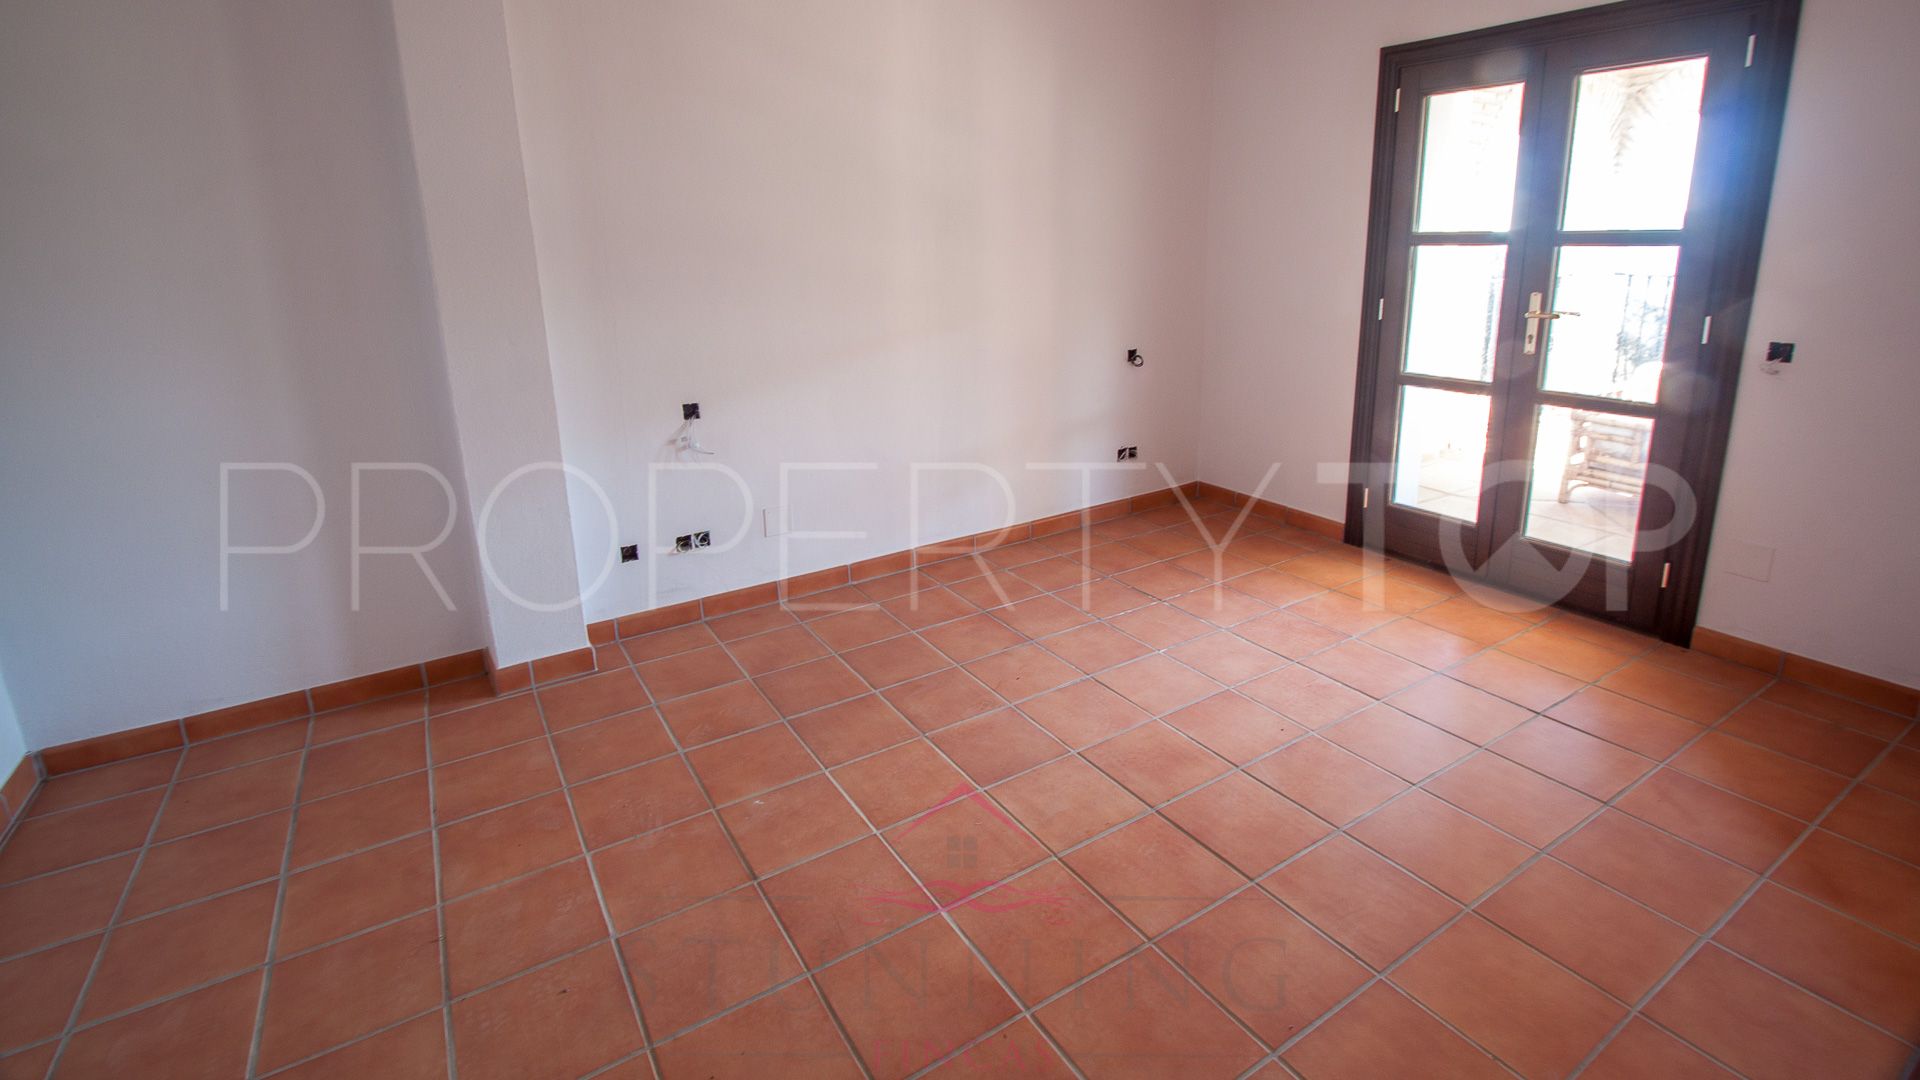 For sale finca in Casares Montaña with 4 bedrooms